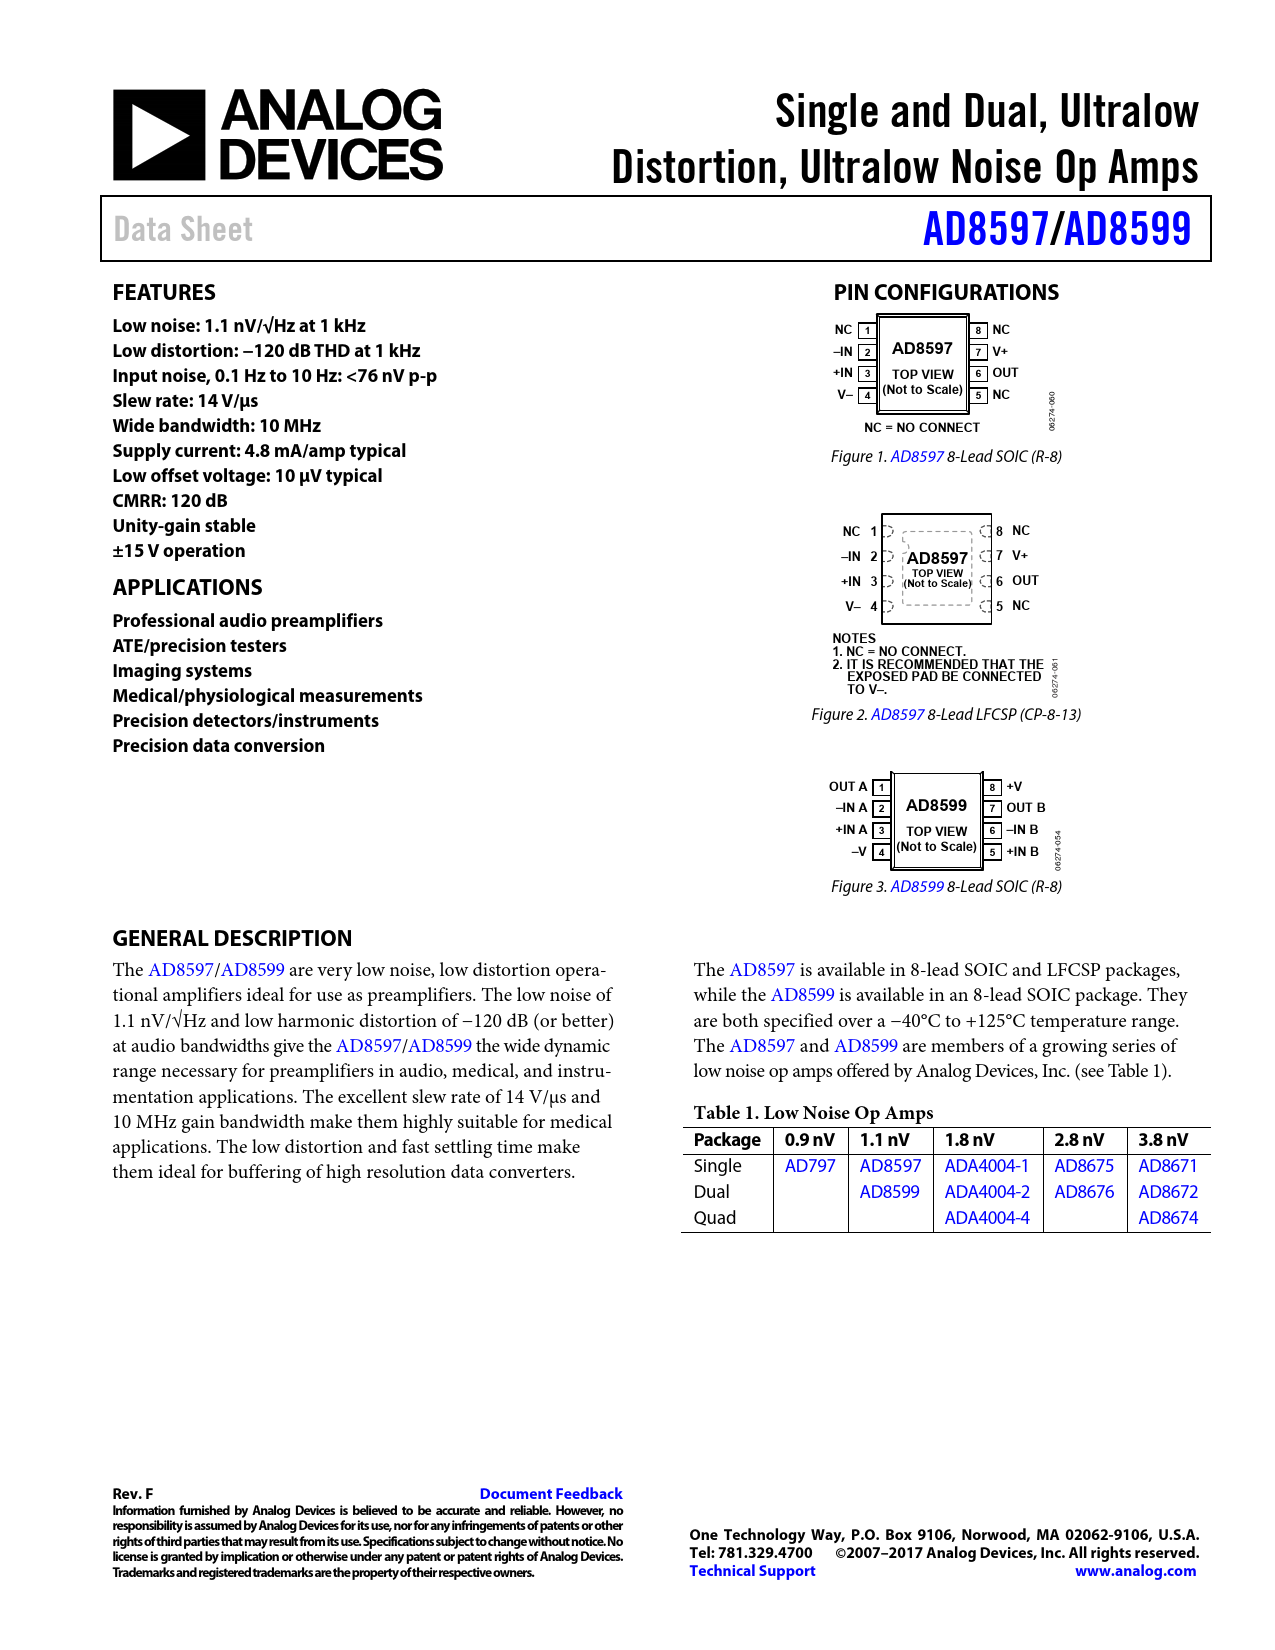 Datasheet AD8597, AD8599 Analog Devices, Версия: F